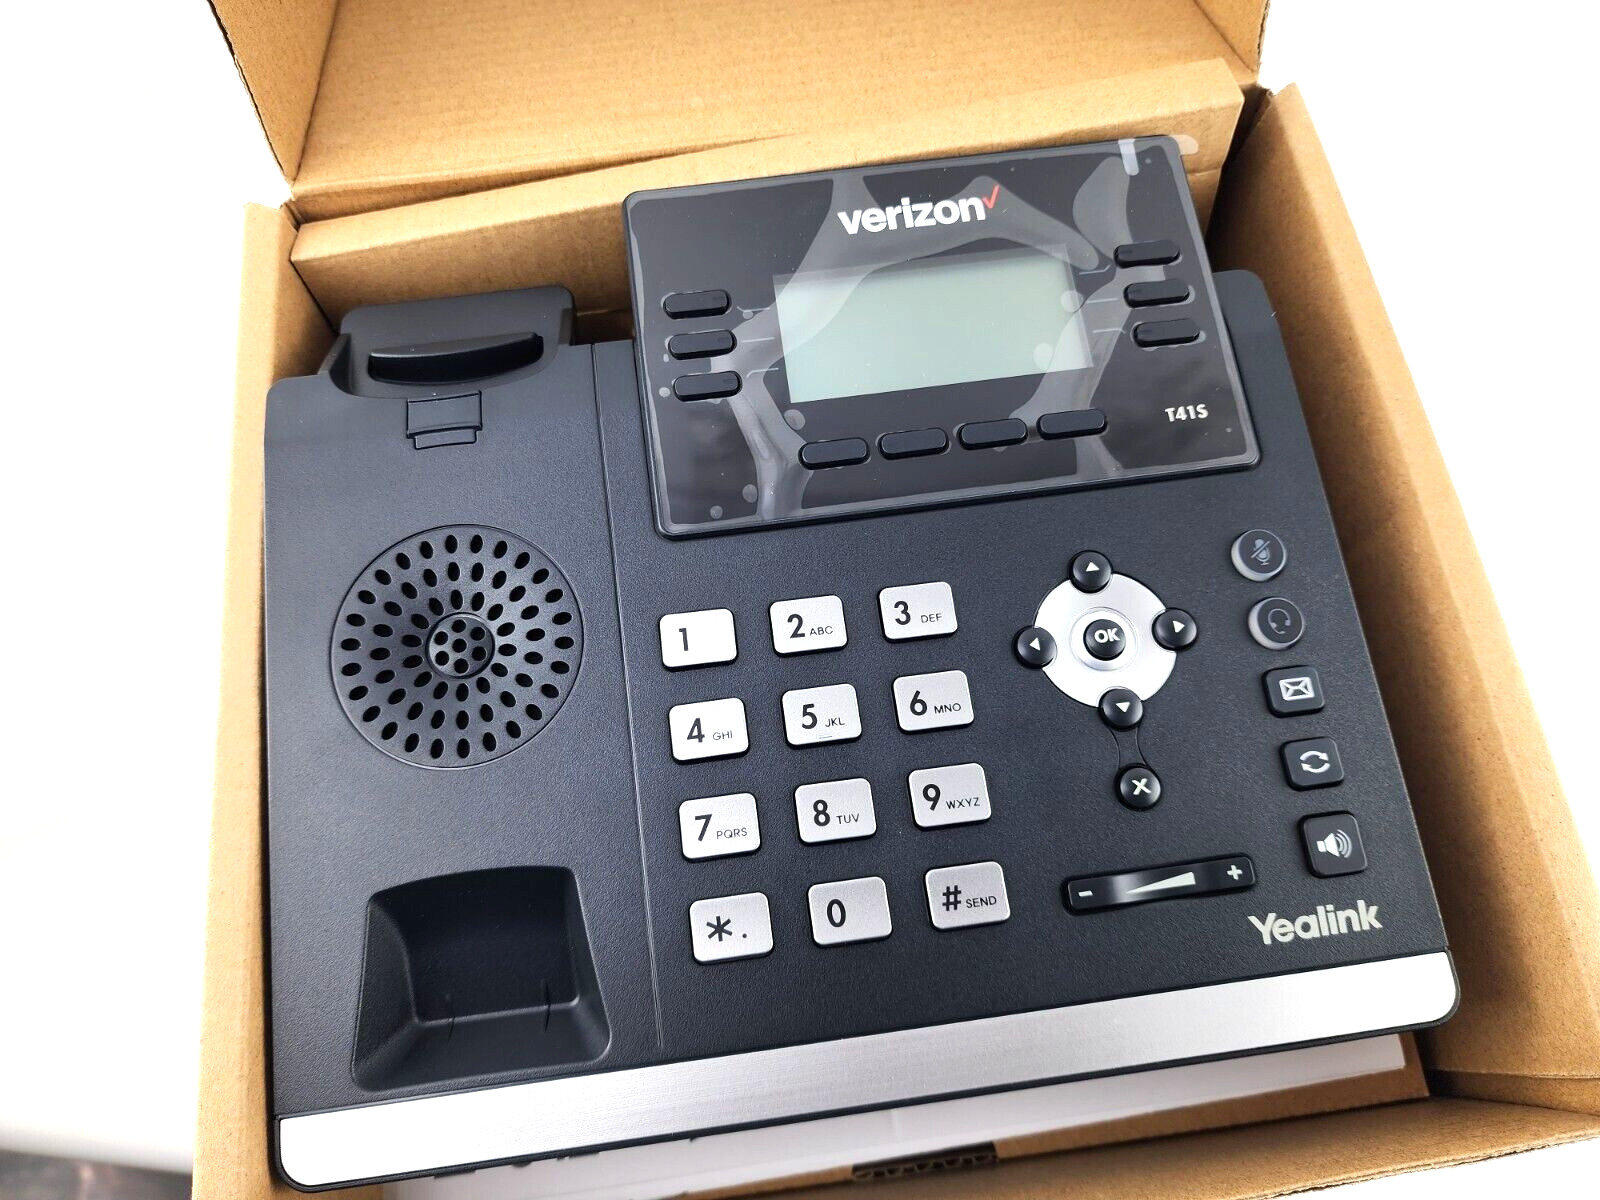 New Verizon Yealink T41S Business IP Desk Phone